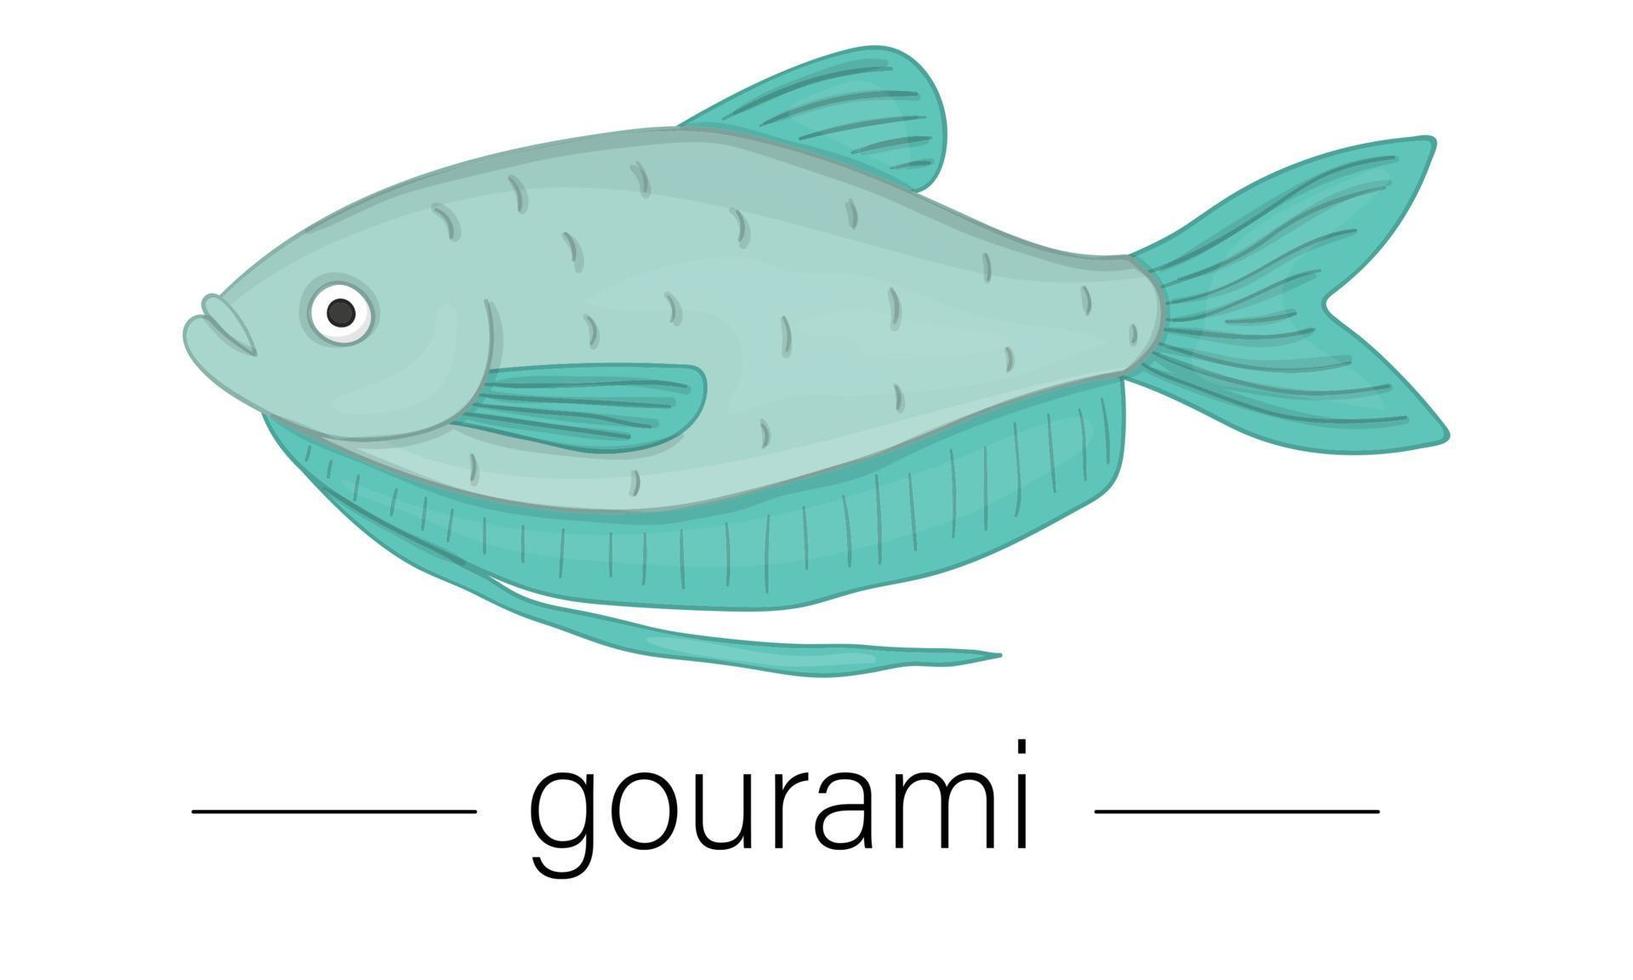 Vector colored illustration of aquarium fish. Cute picture of gourami for pet shops or children illustration